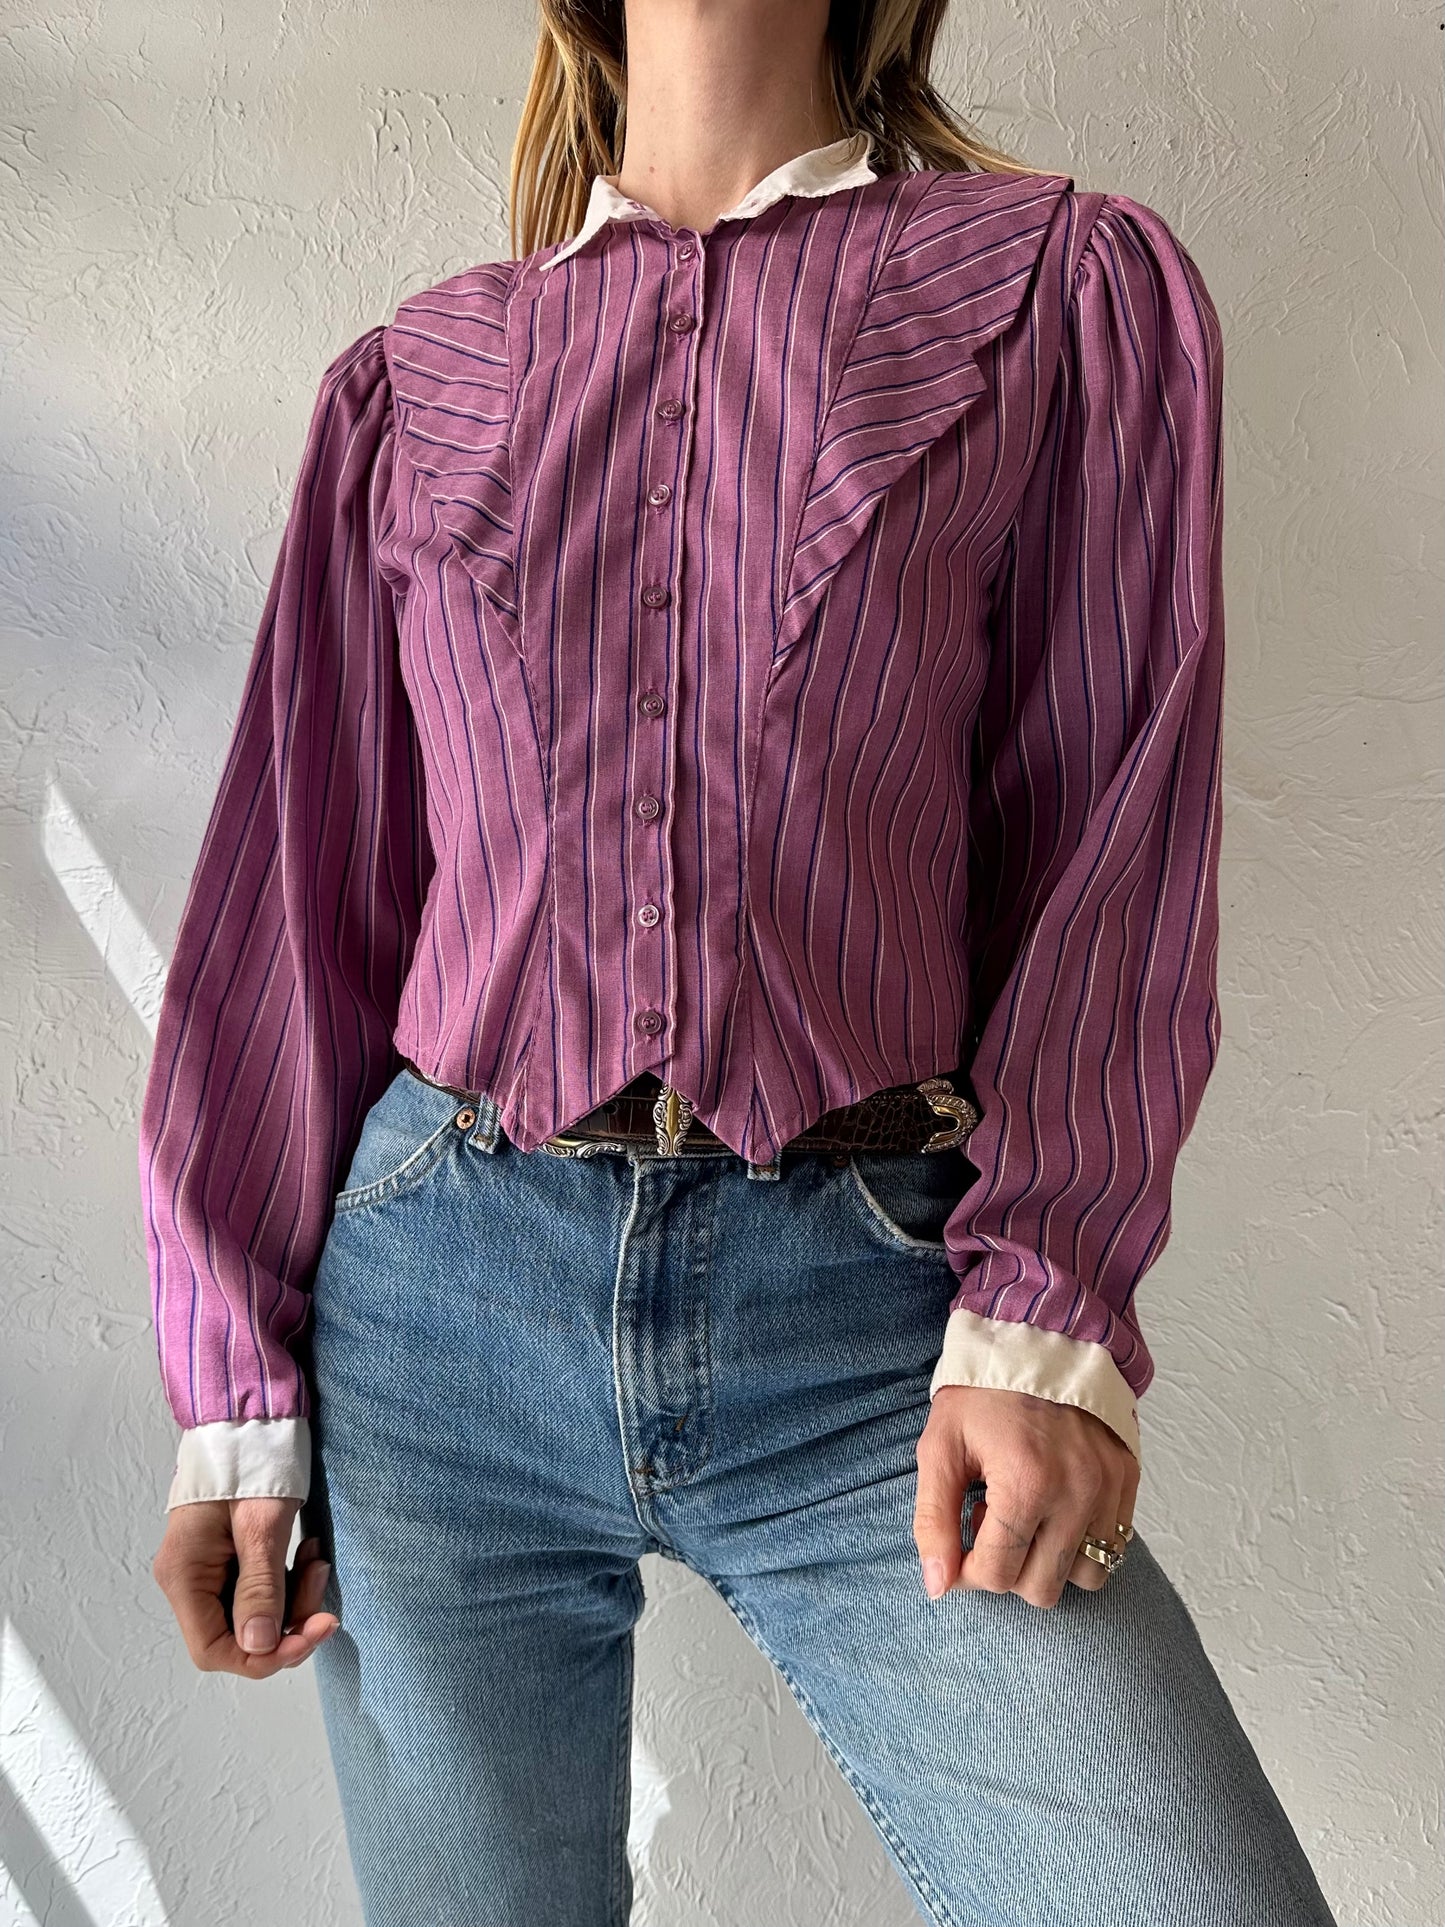 70s 'Freedom' Purple Striped Blouse / Medium